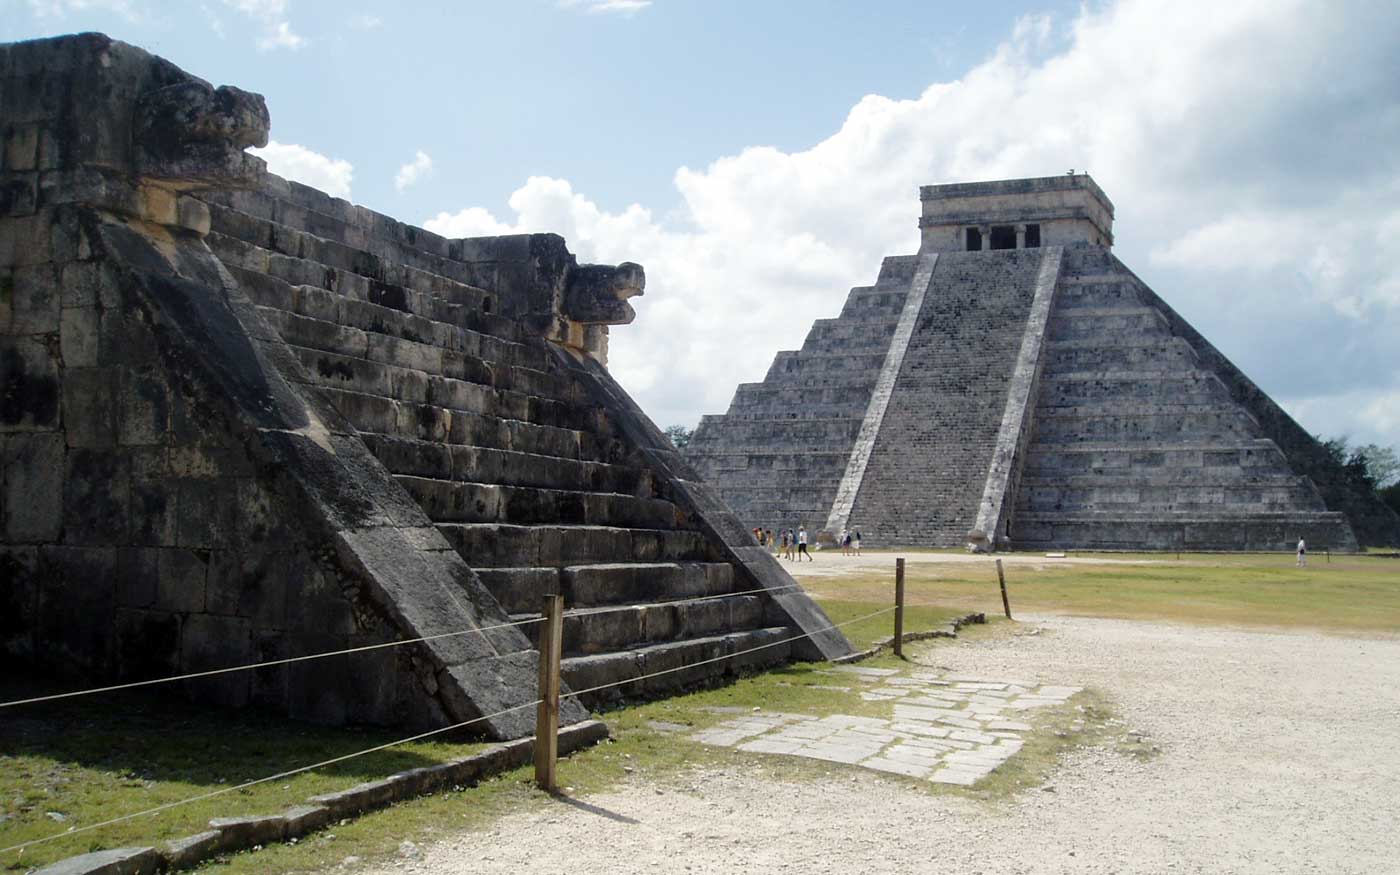 Mayan Museum of Cancun